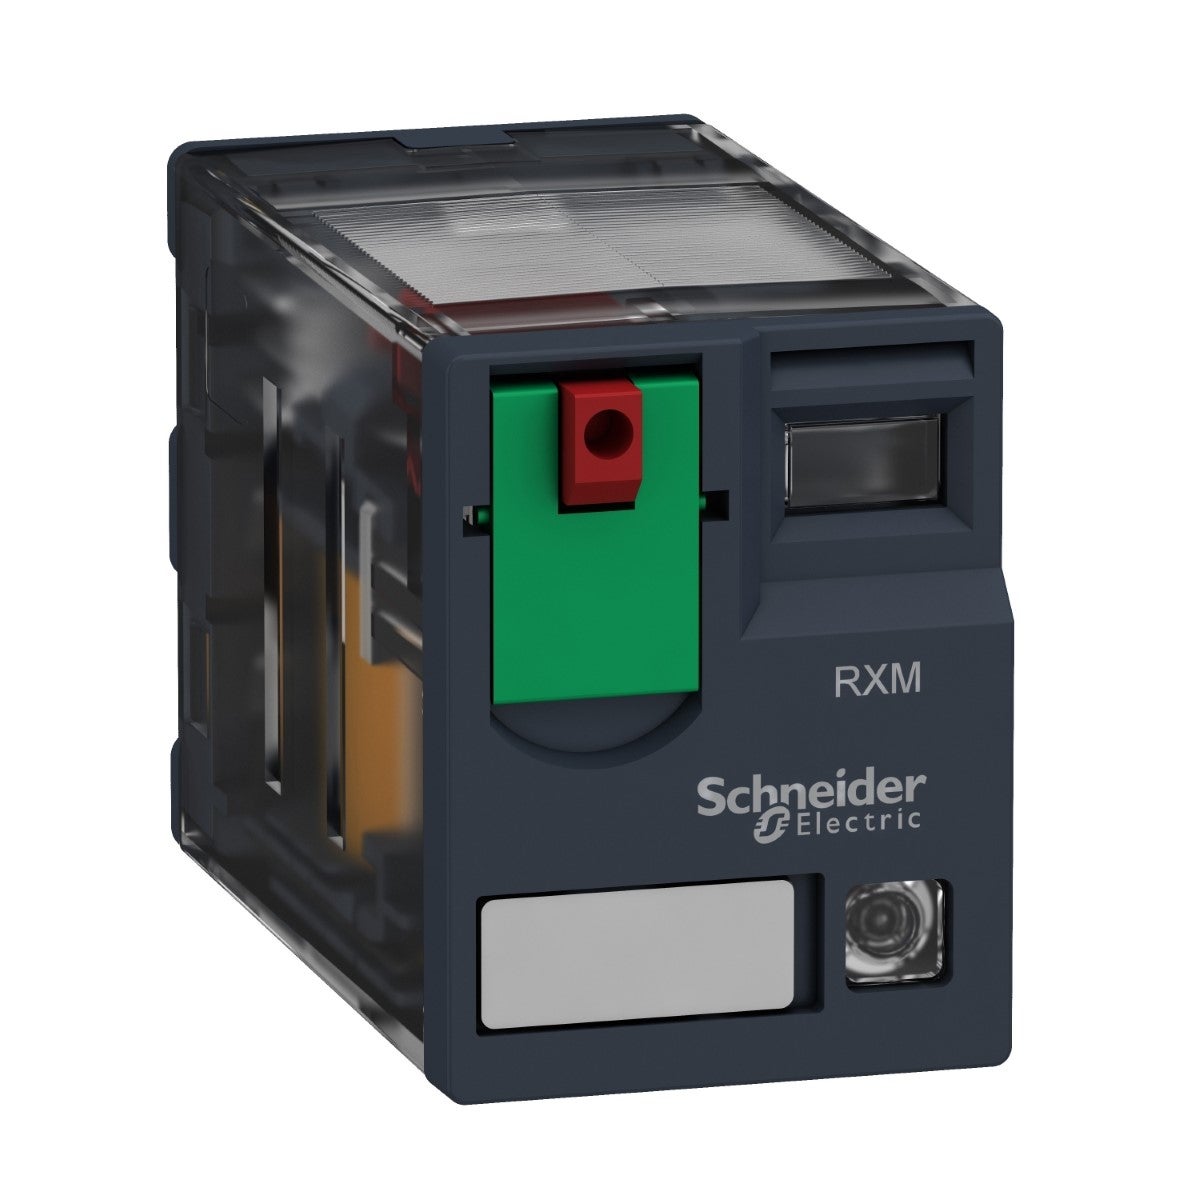 Schneider Electric Miniature Plug-in relay - Zelio RXM 2 C/O 48 V AC 12 A with LED